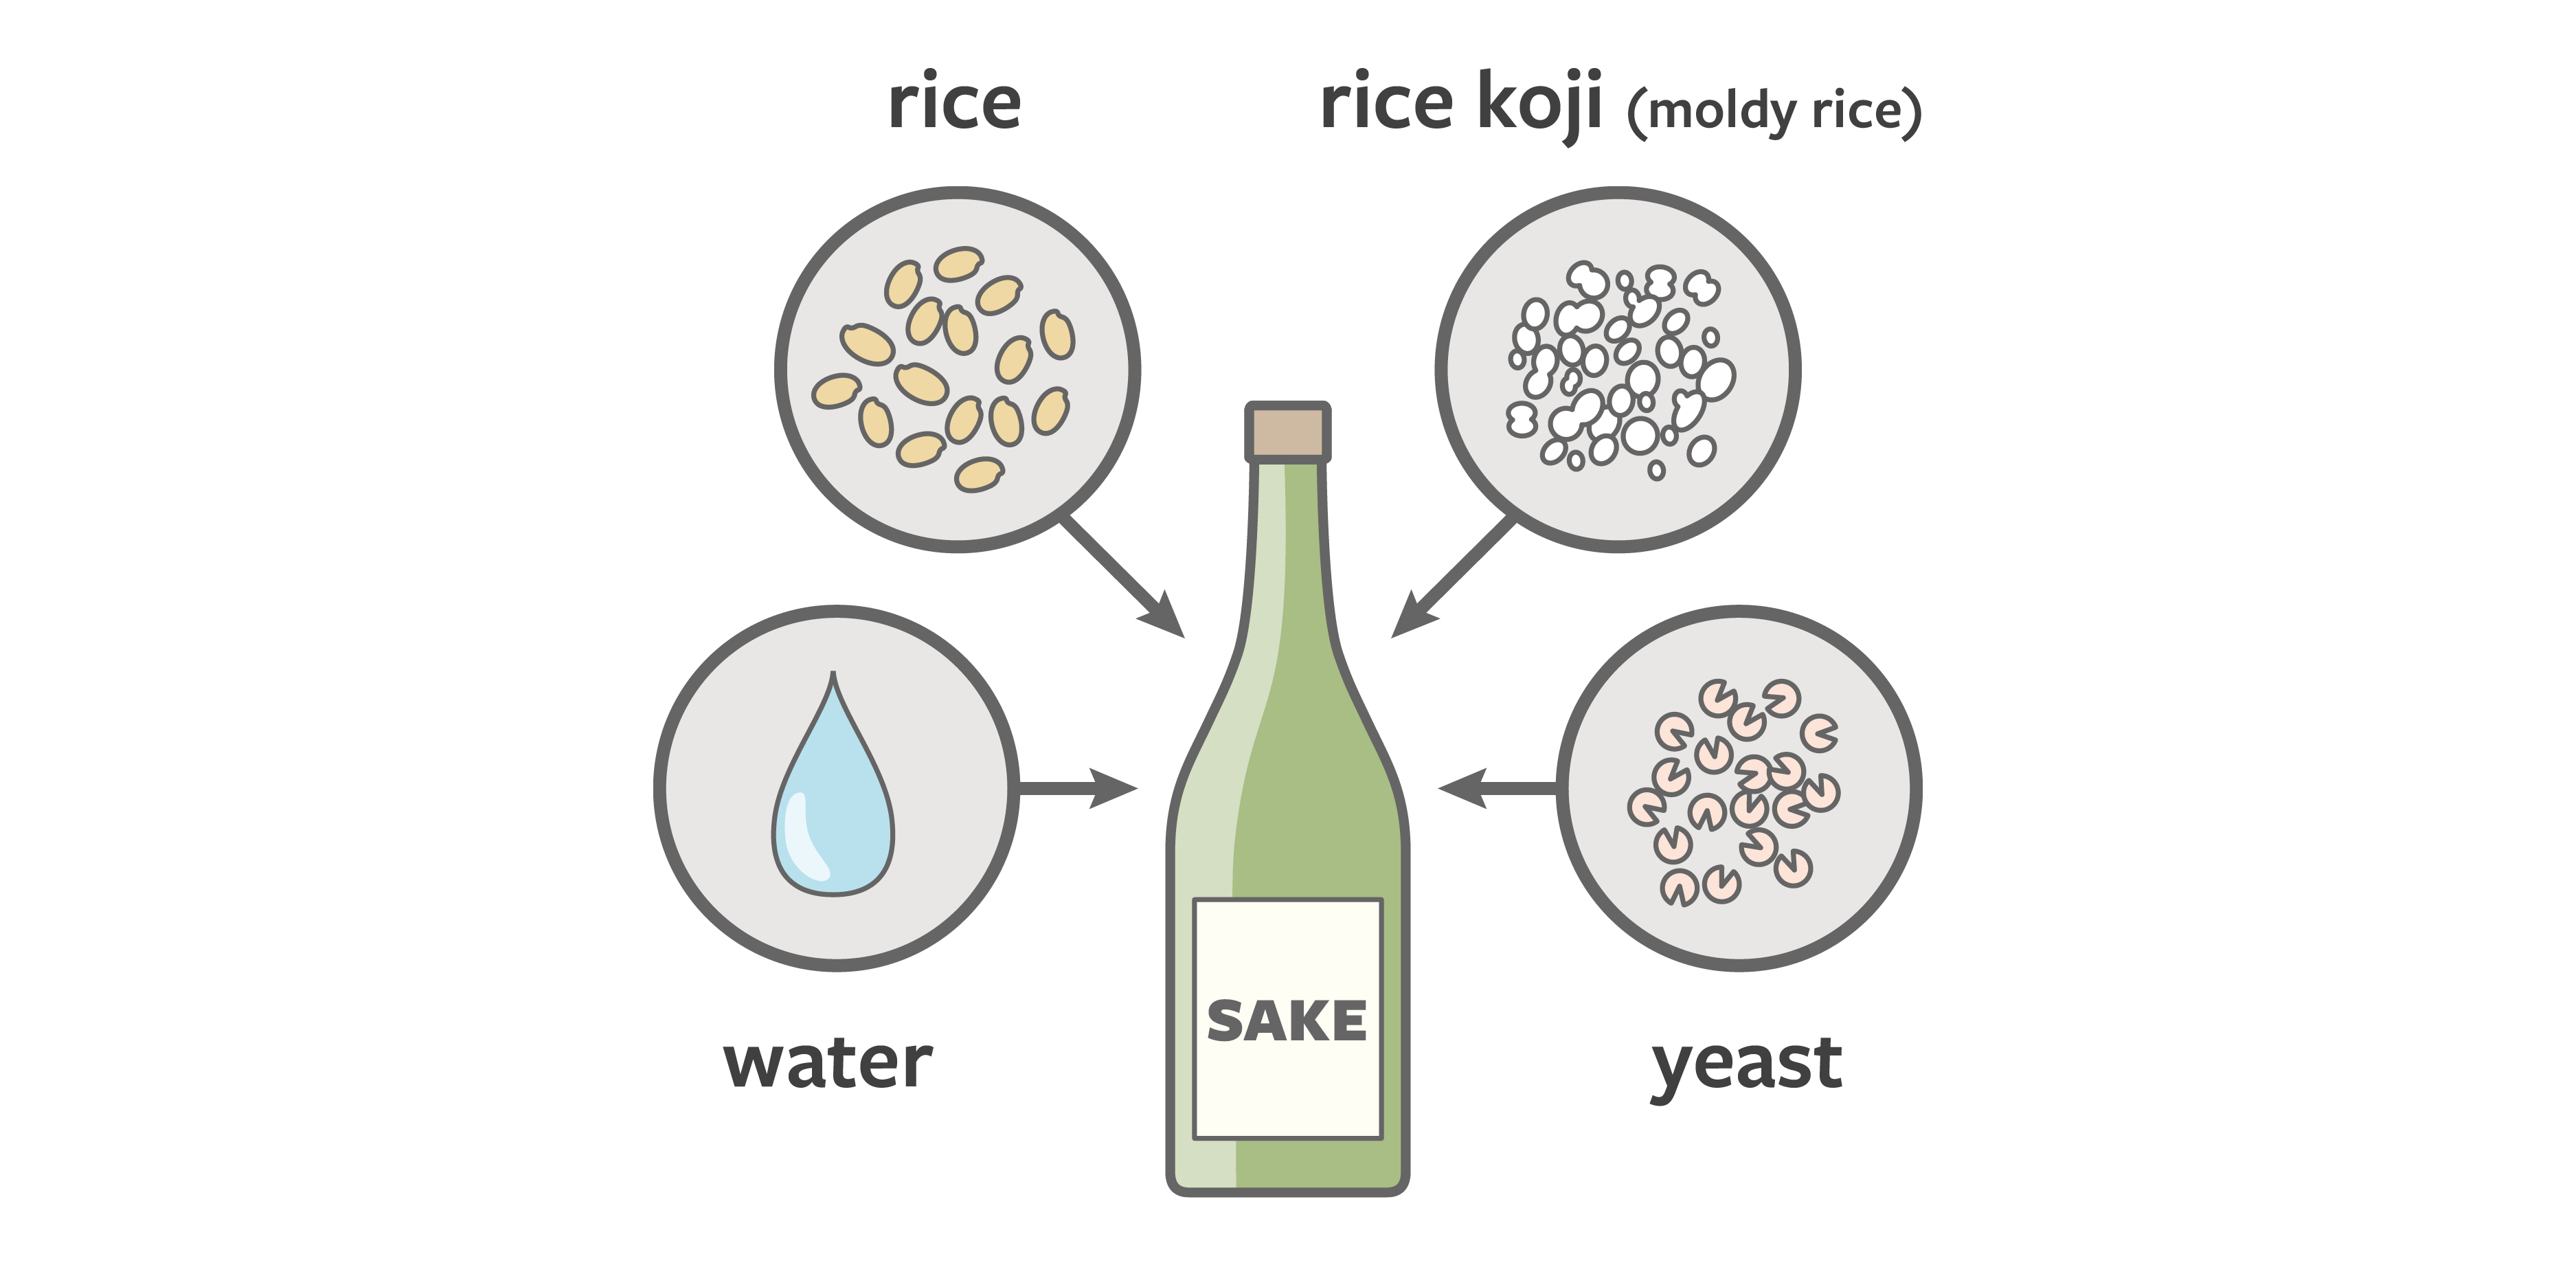 Sake is made of water, rice, yeast and koji.